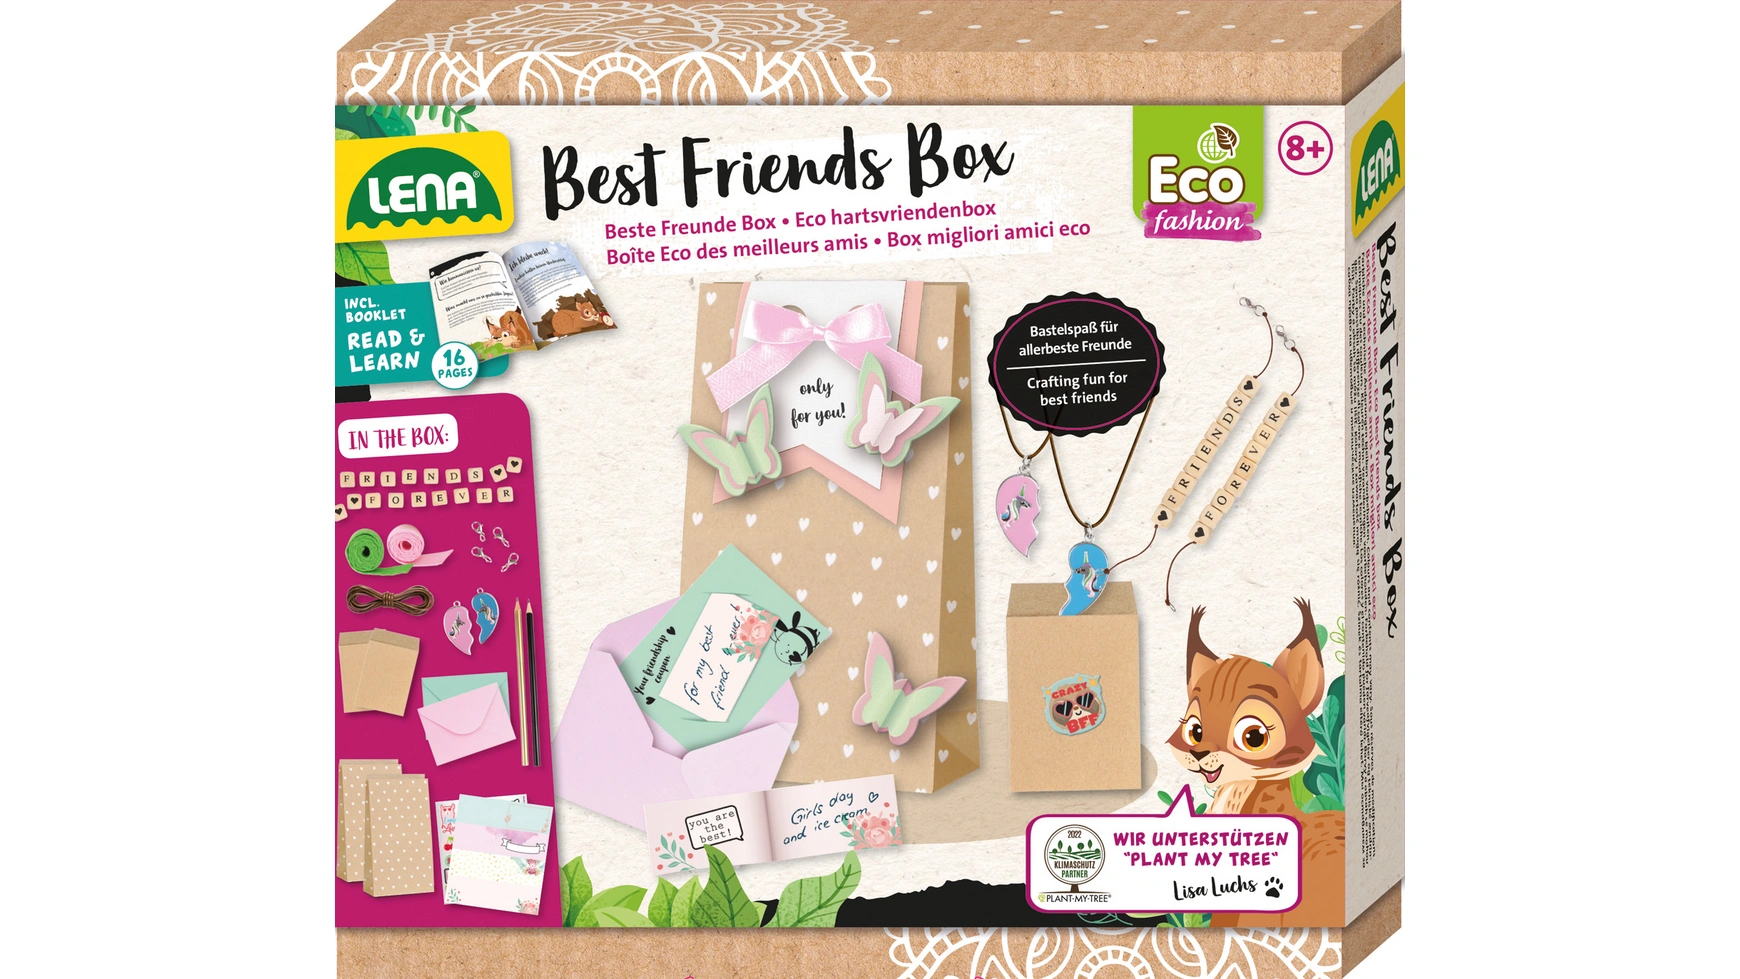 Eco best friends box, складной ящик